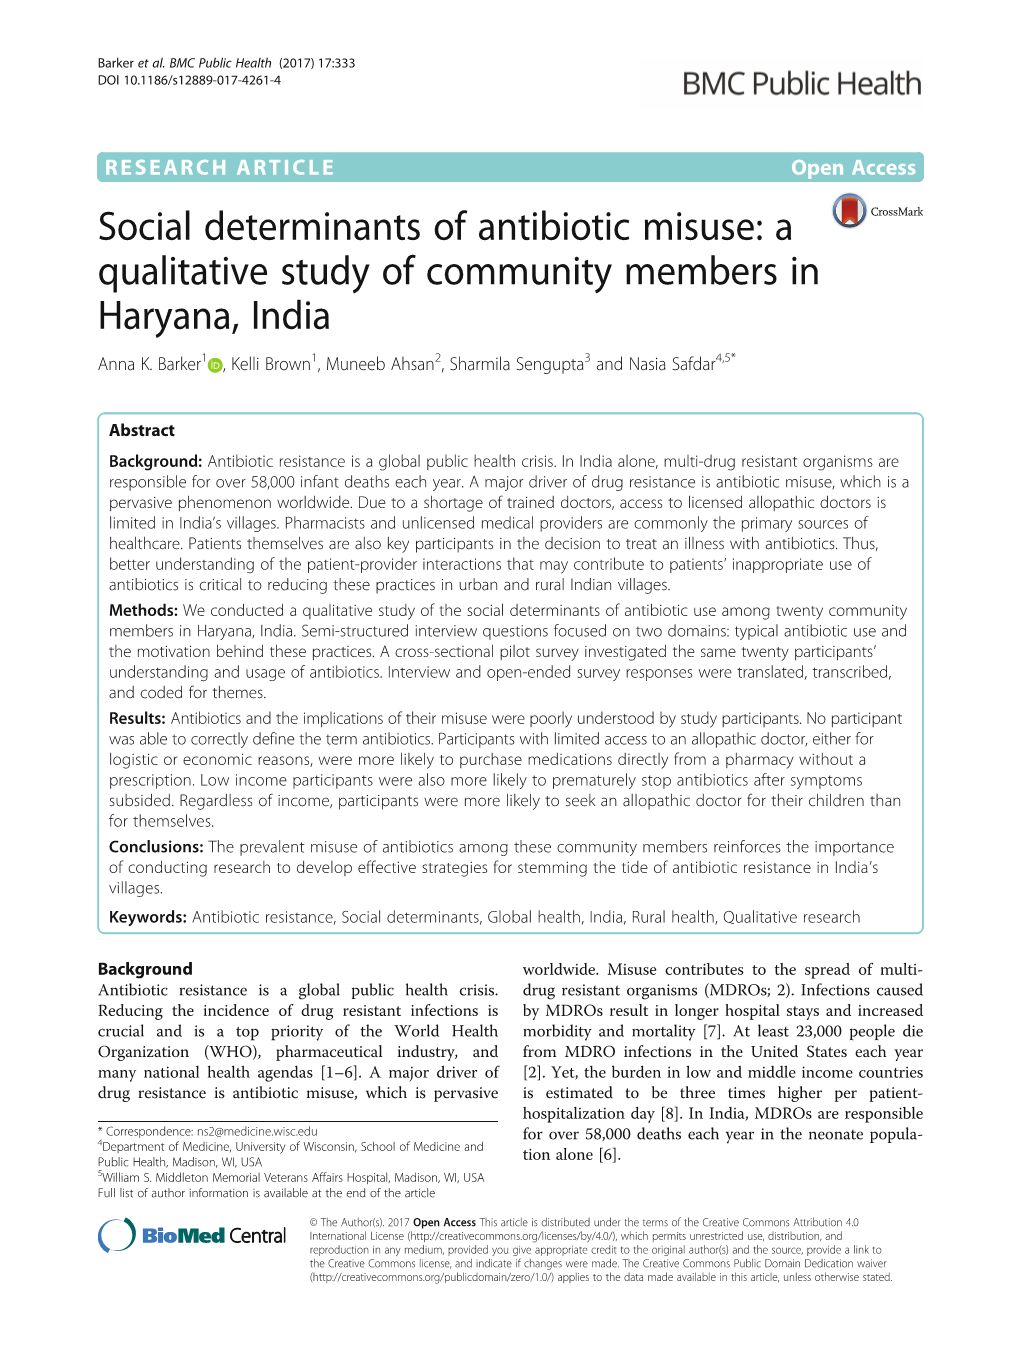 Social Determinants of Antibiotic Misuse: a Qualitative Study of Community Members in Haryana, India Anna K